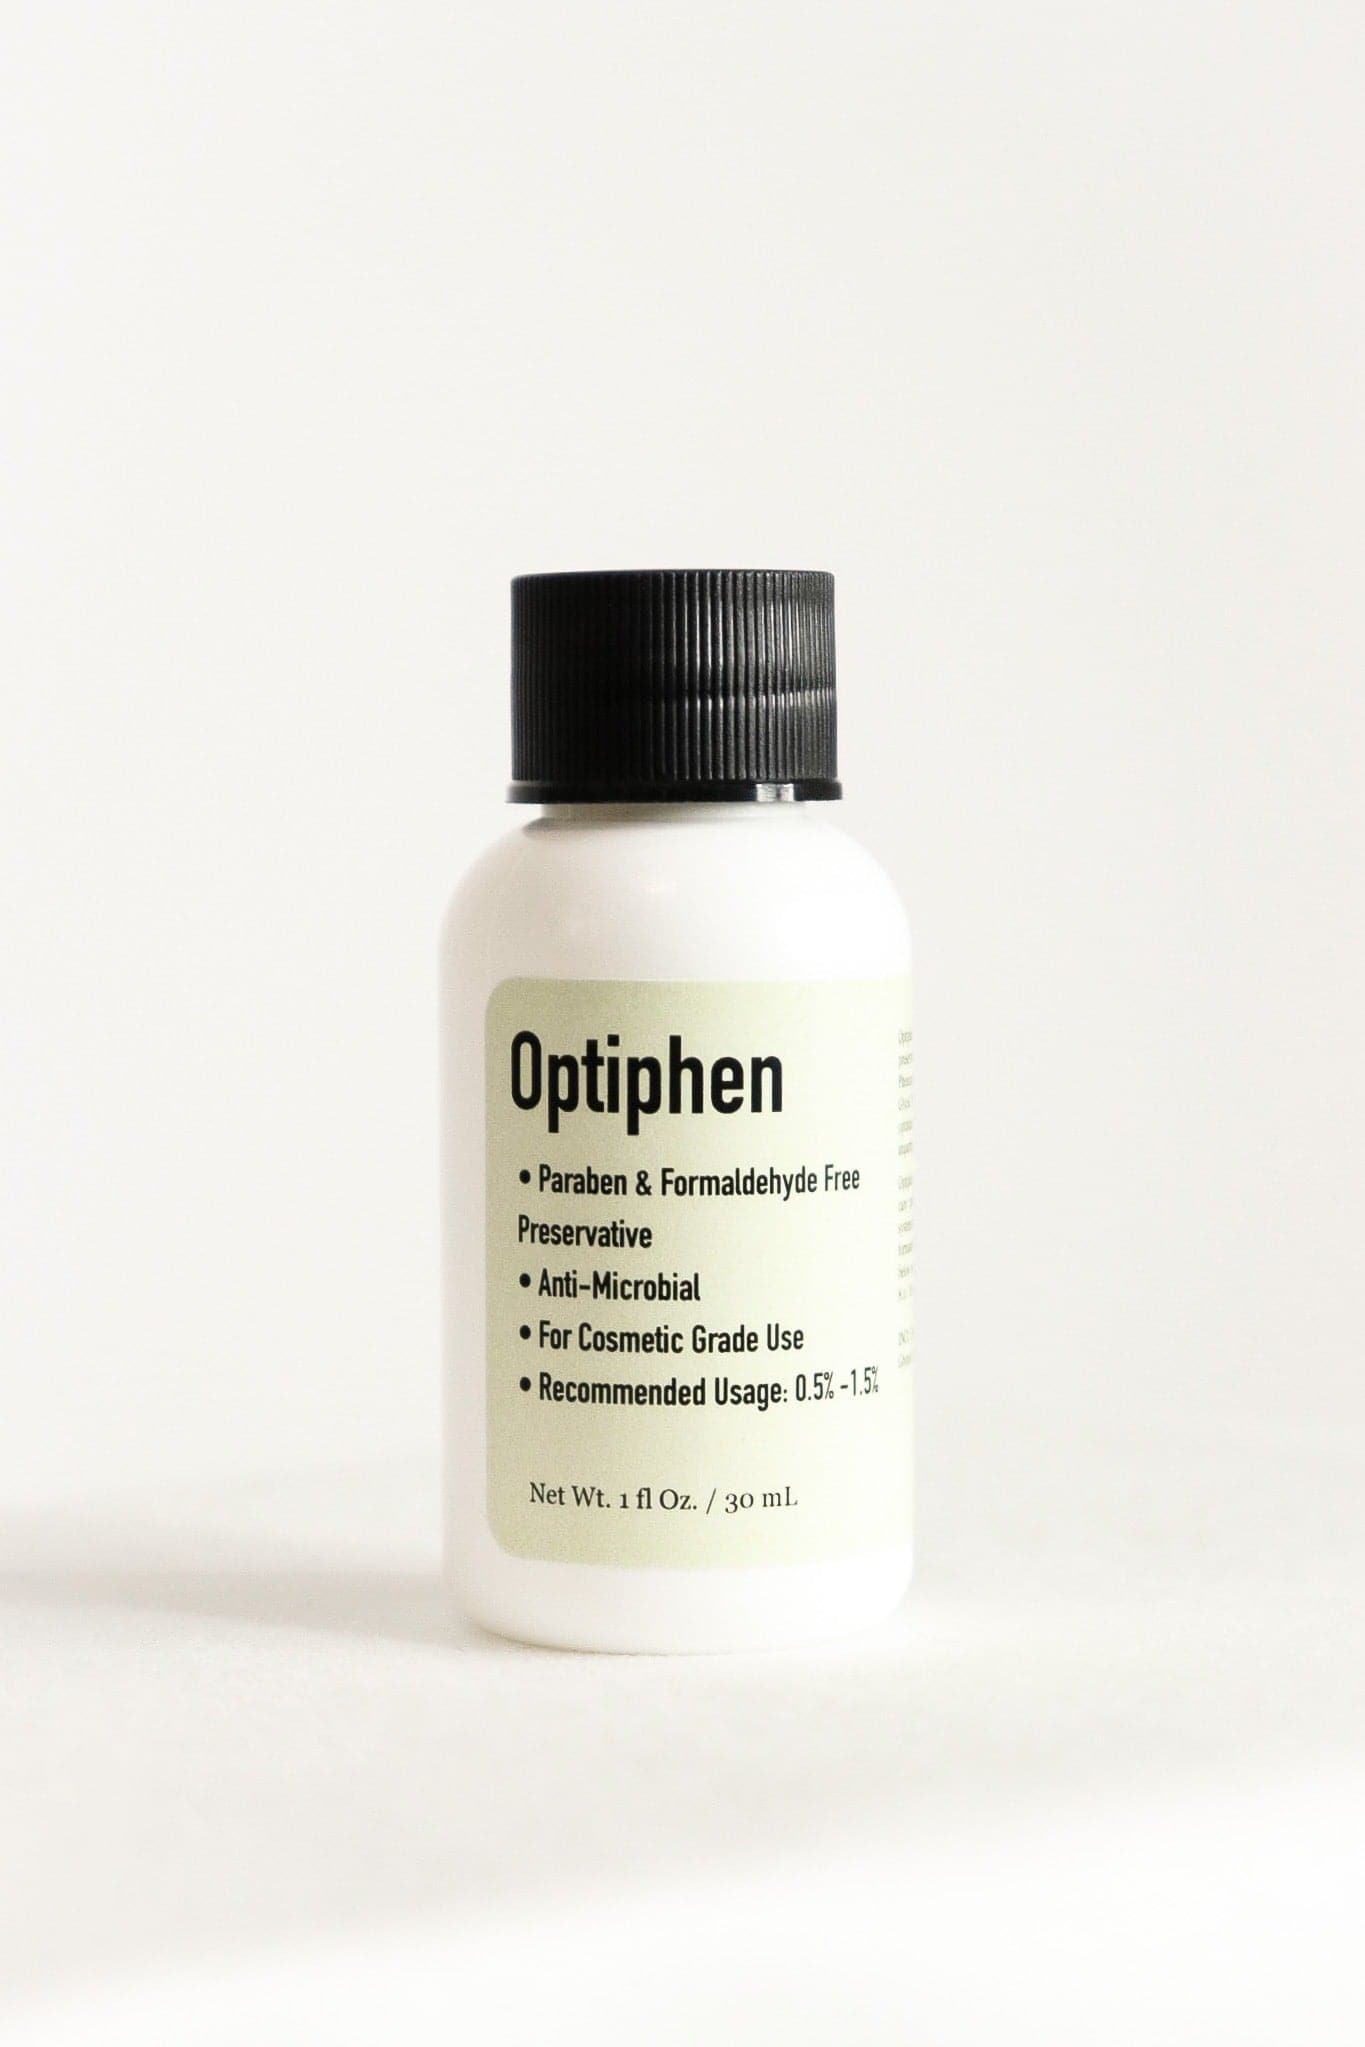 Optiphen Plus - Buy Bulk  Essential Wholesale – Essential Labs